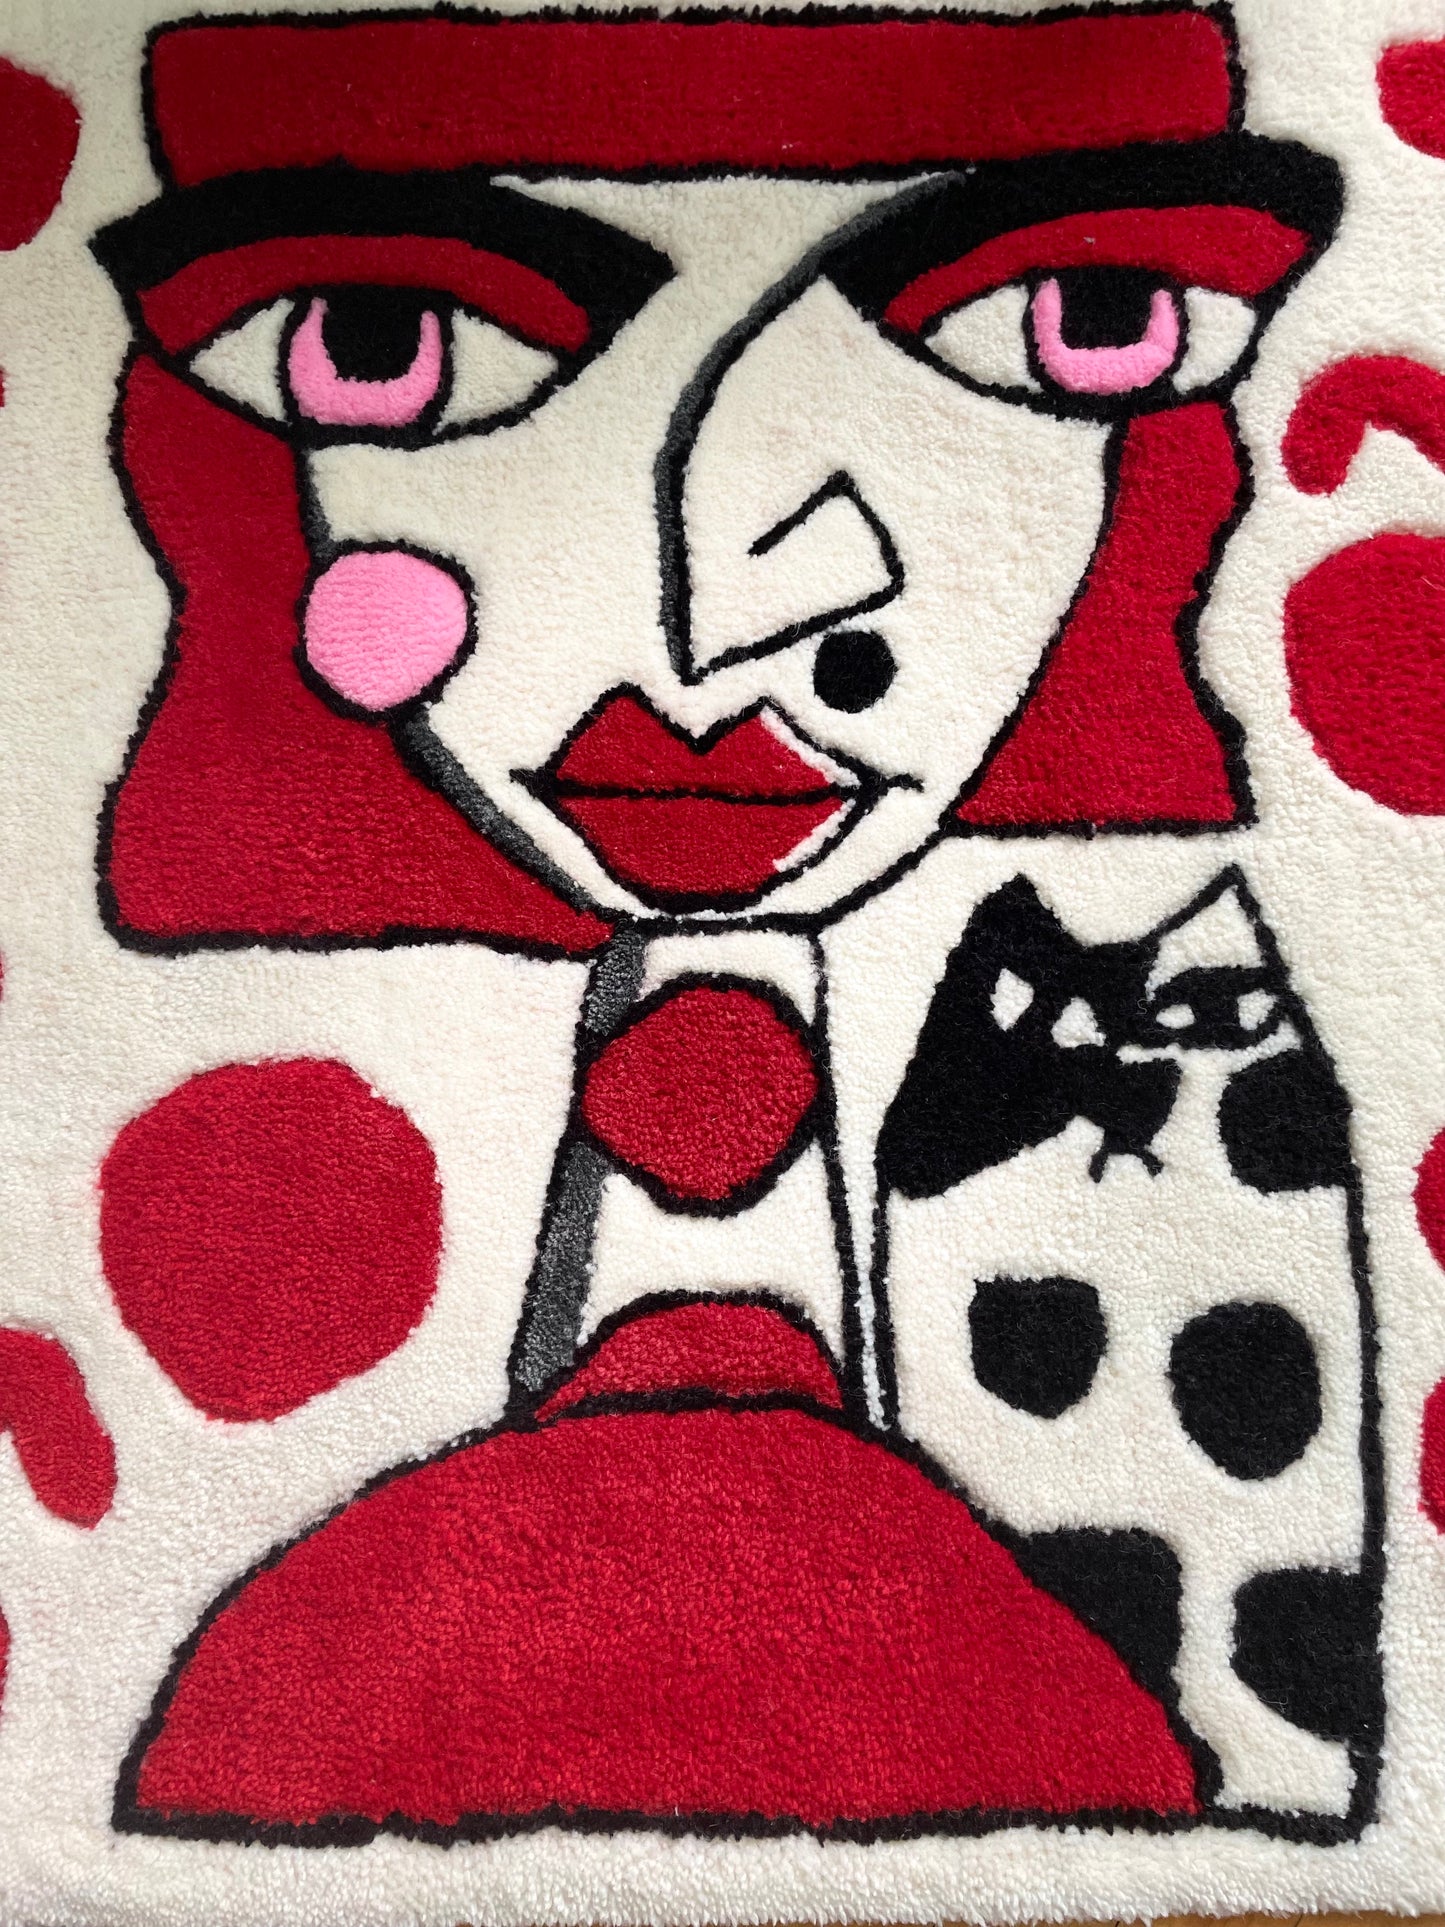 Miss Polka Dots - Handmade tufted rug - 100% Wool - Home decor carpet - Abstract Art